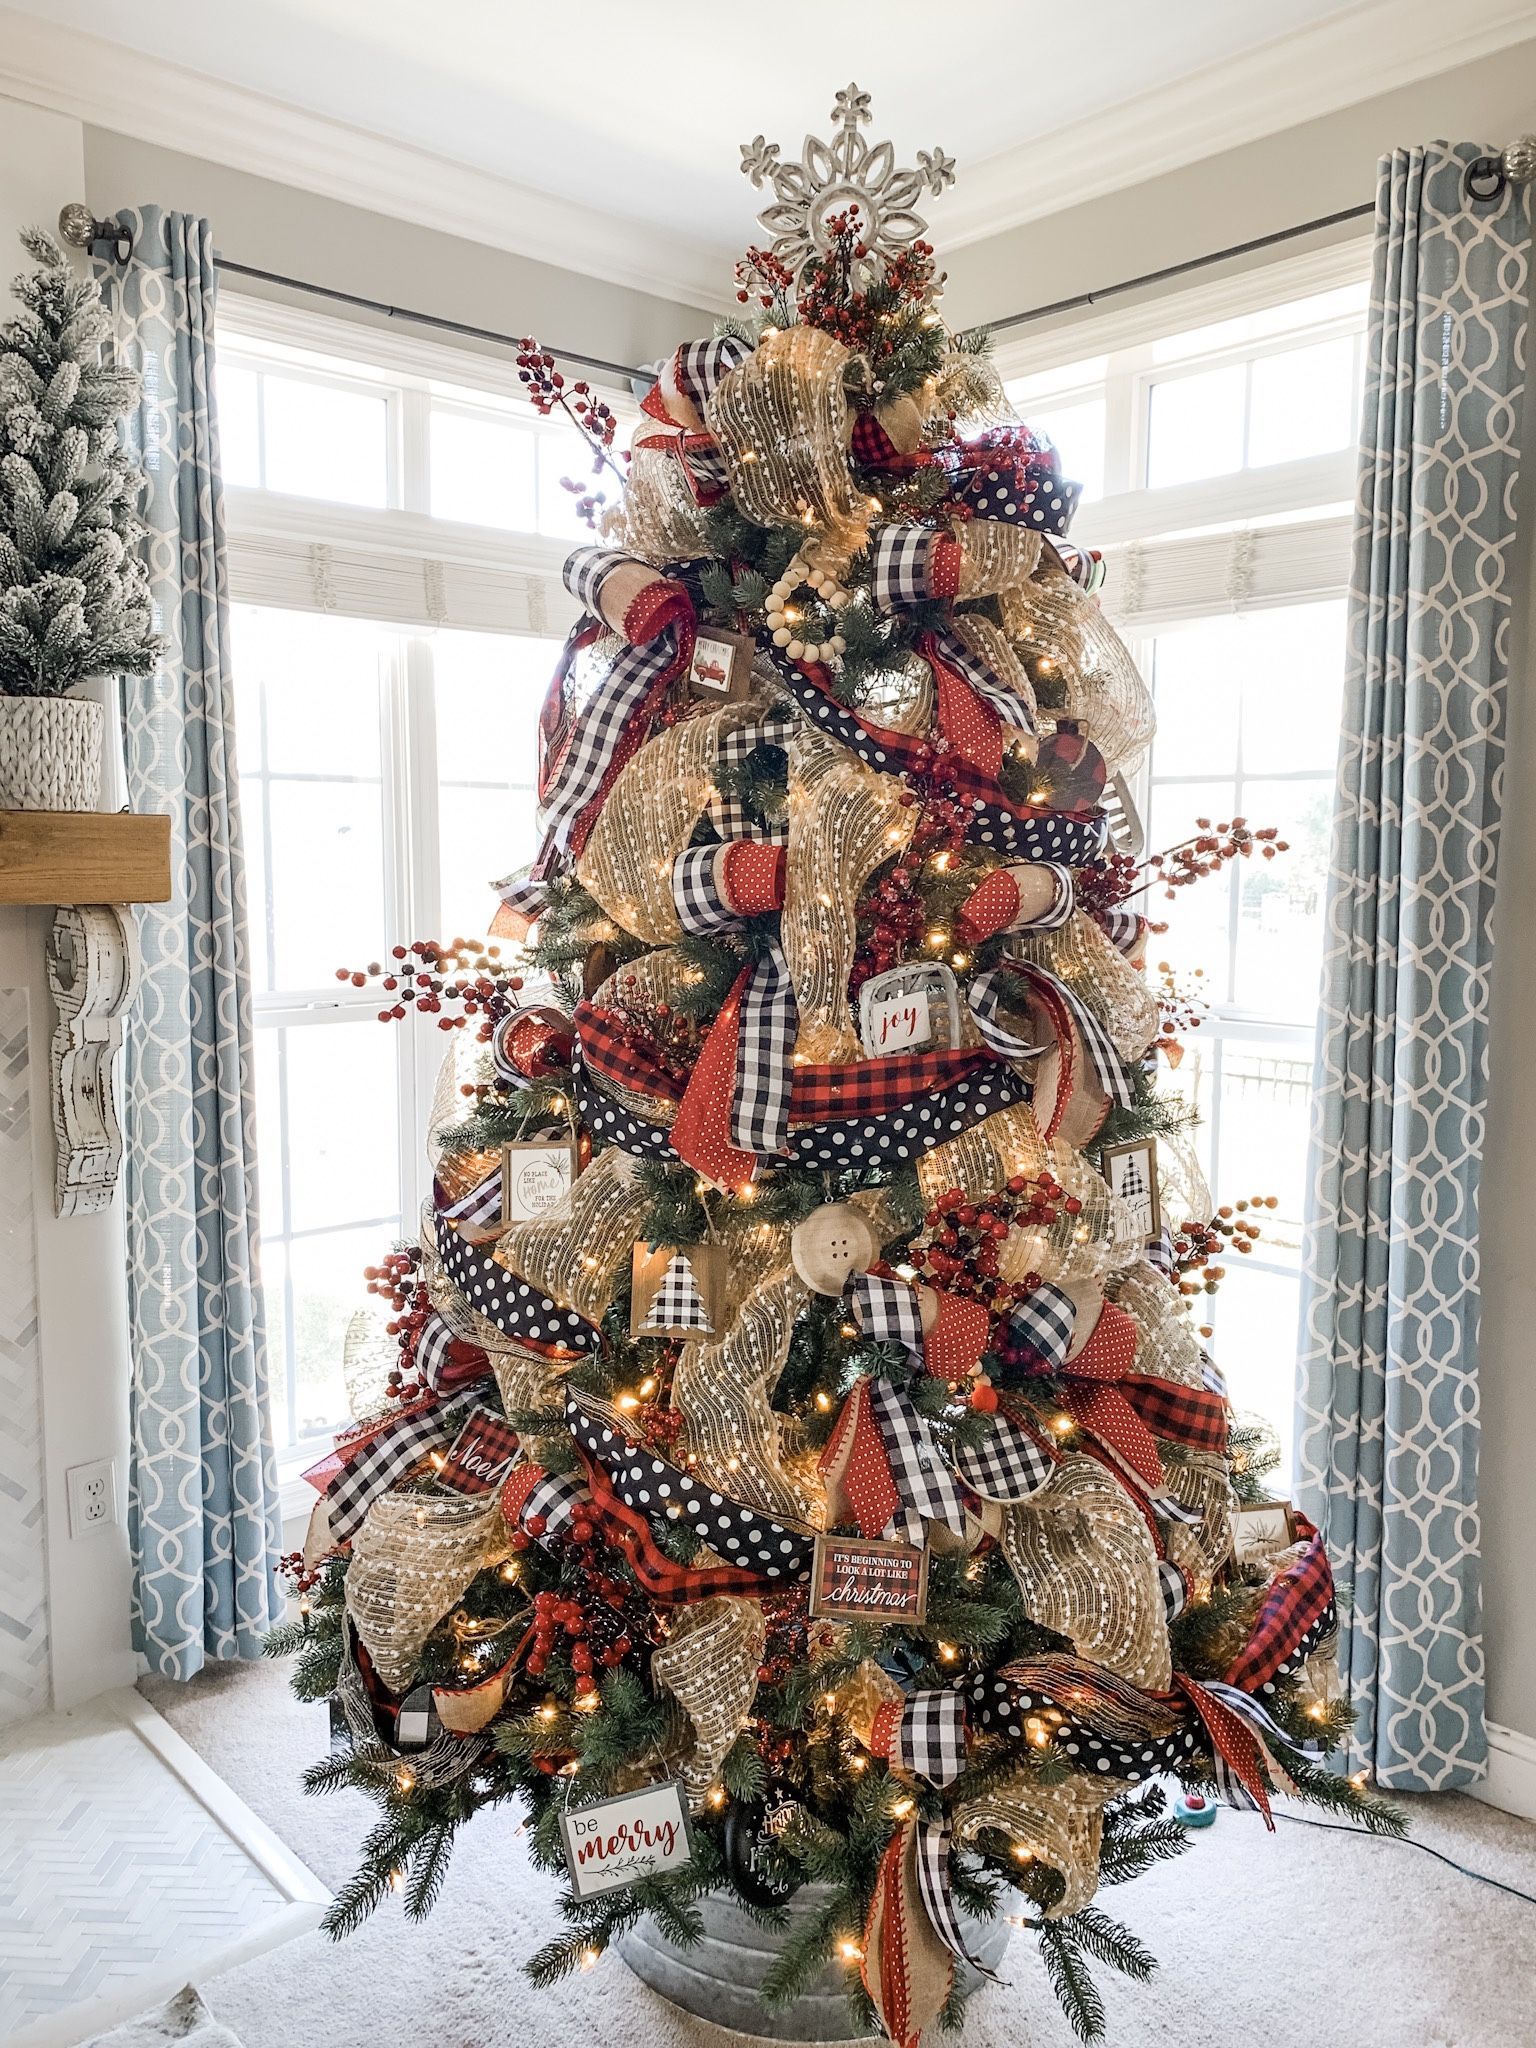 Christmas tree ideas using ribbon! Buffalo check, polka dots and more for a cute combo! -   17 holiday Christmas ideas